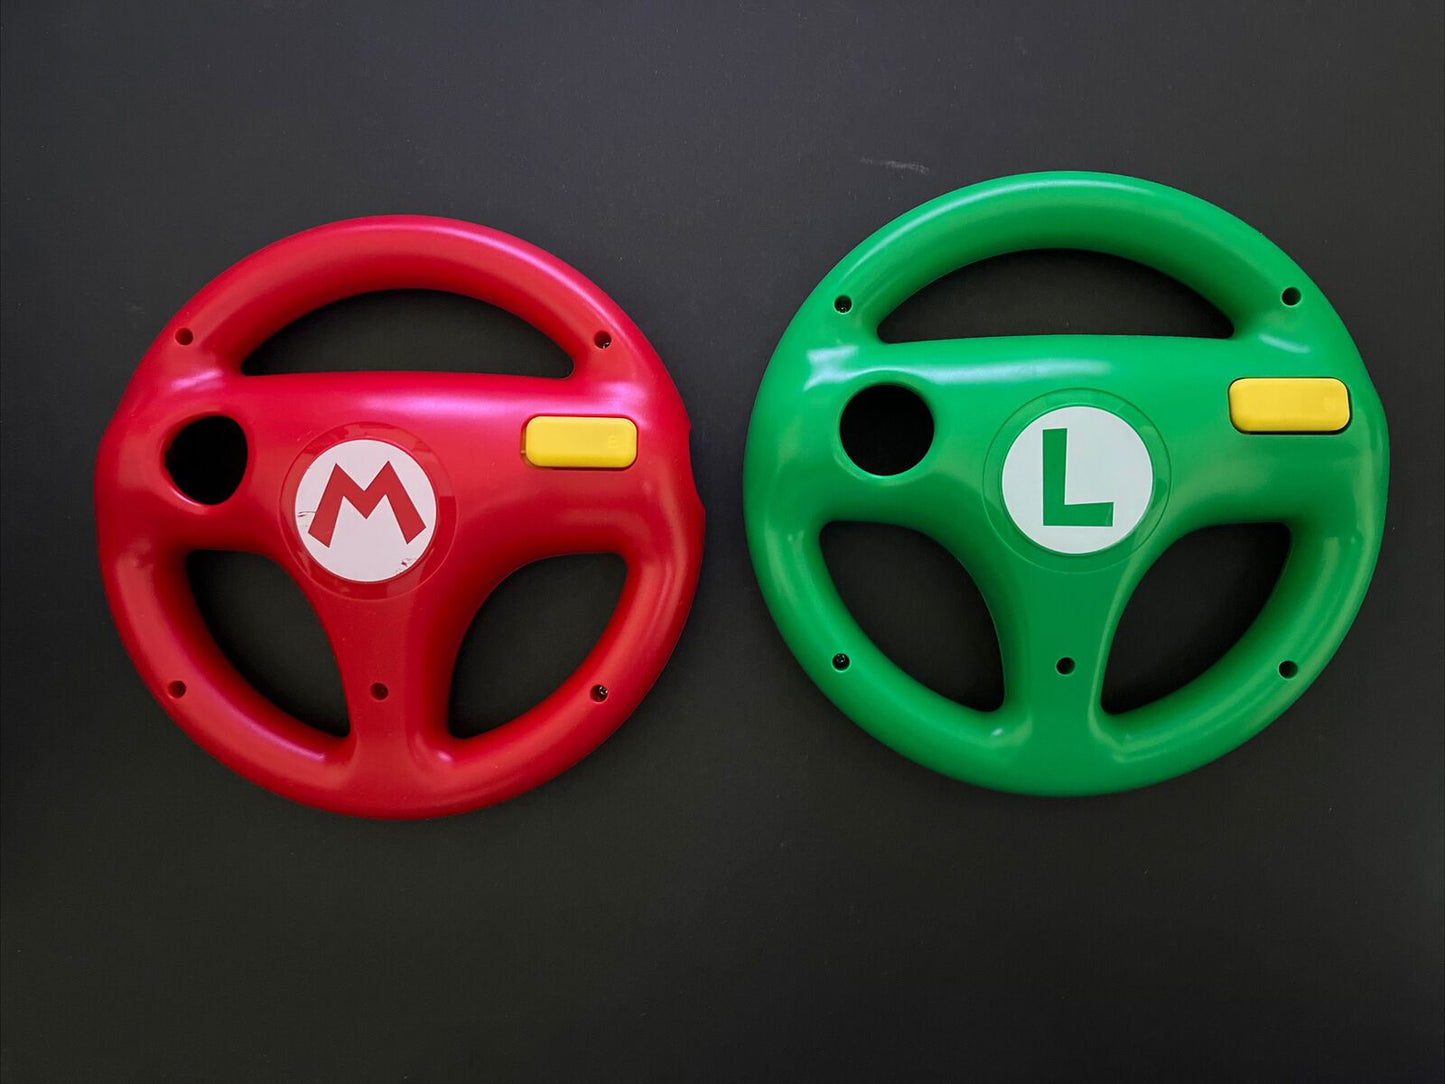 Genuine Official Nintendo Limited Edition Mario & Luigi Wheel Wii Controller